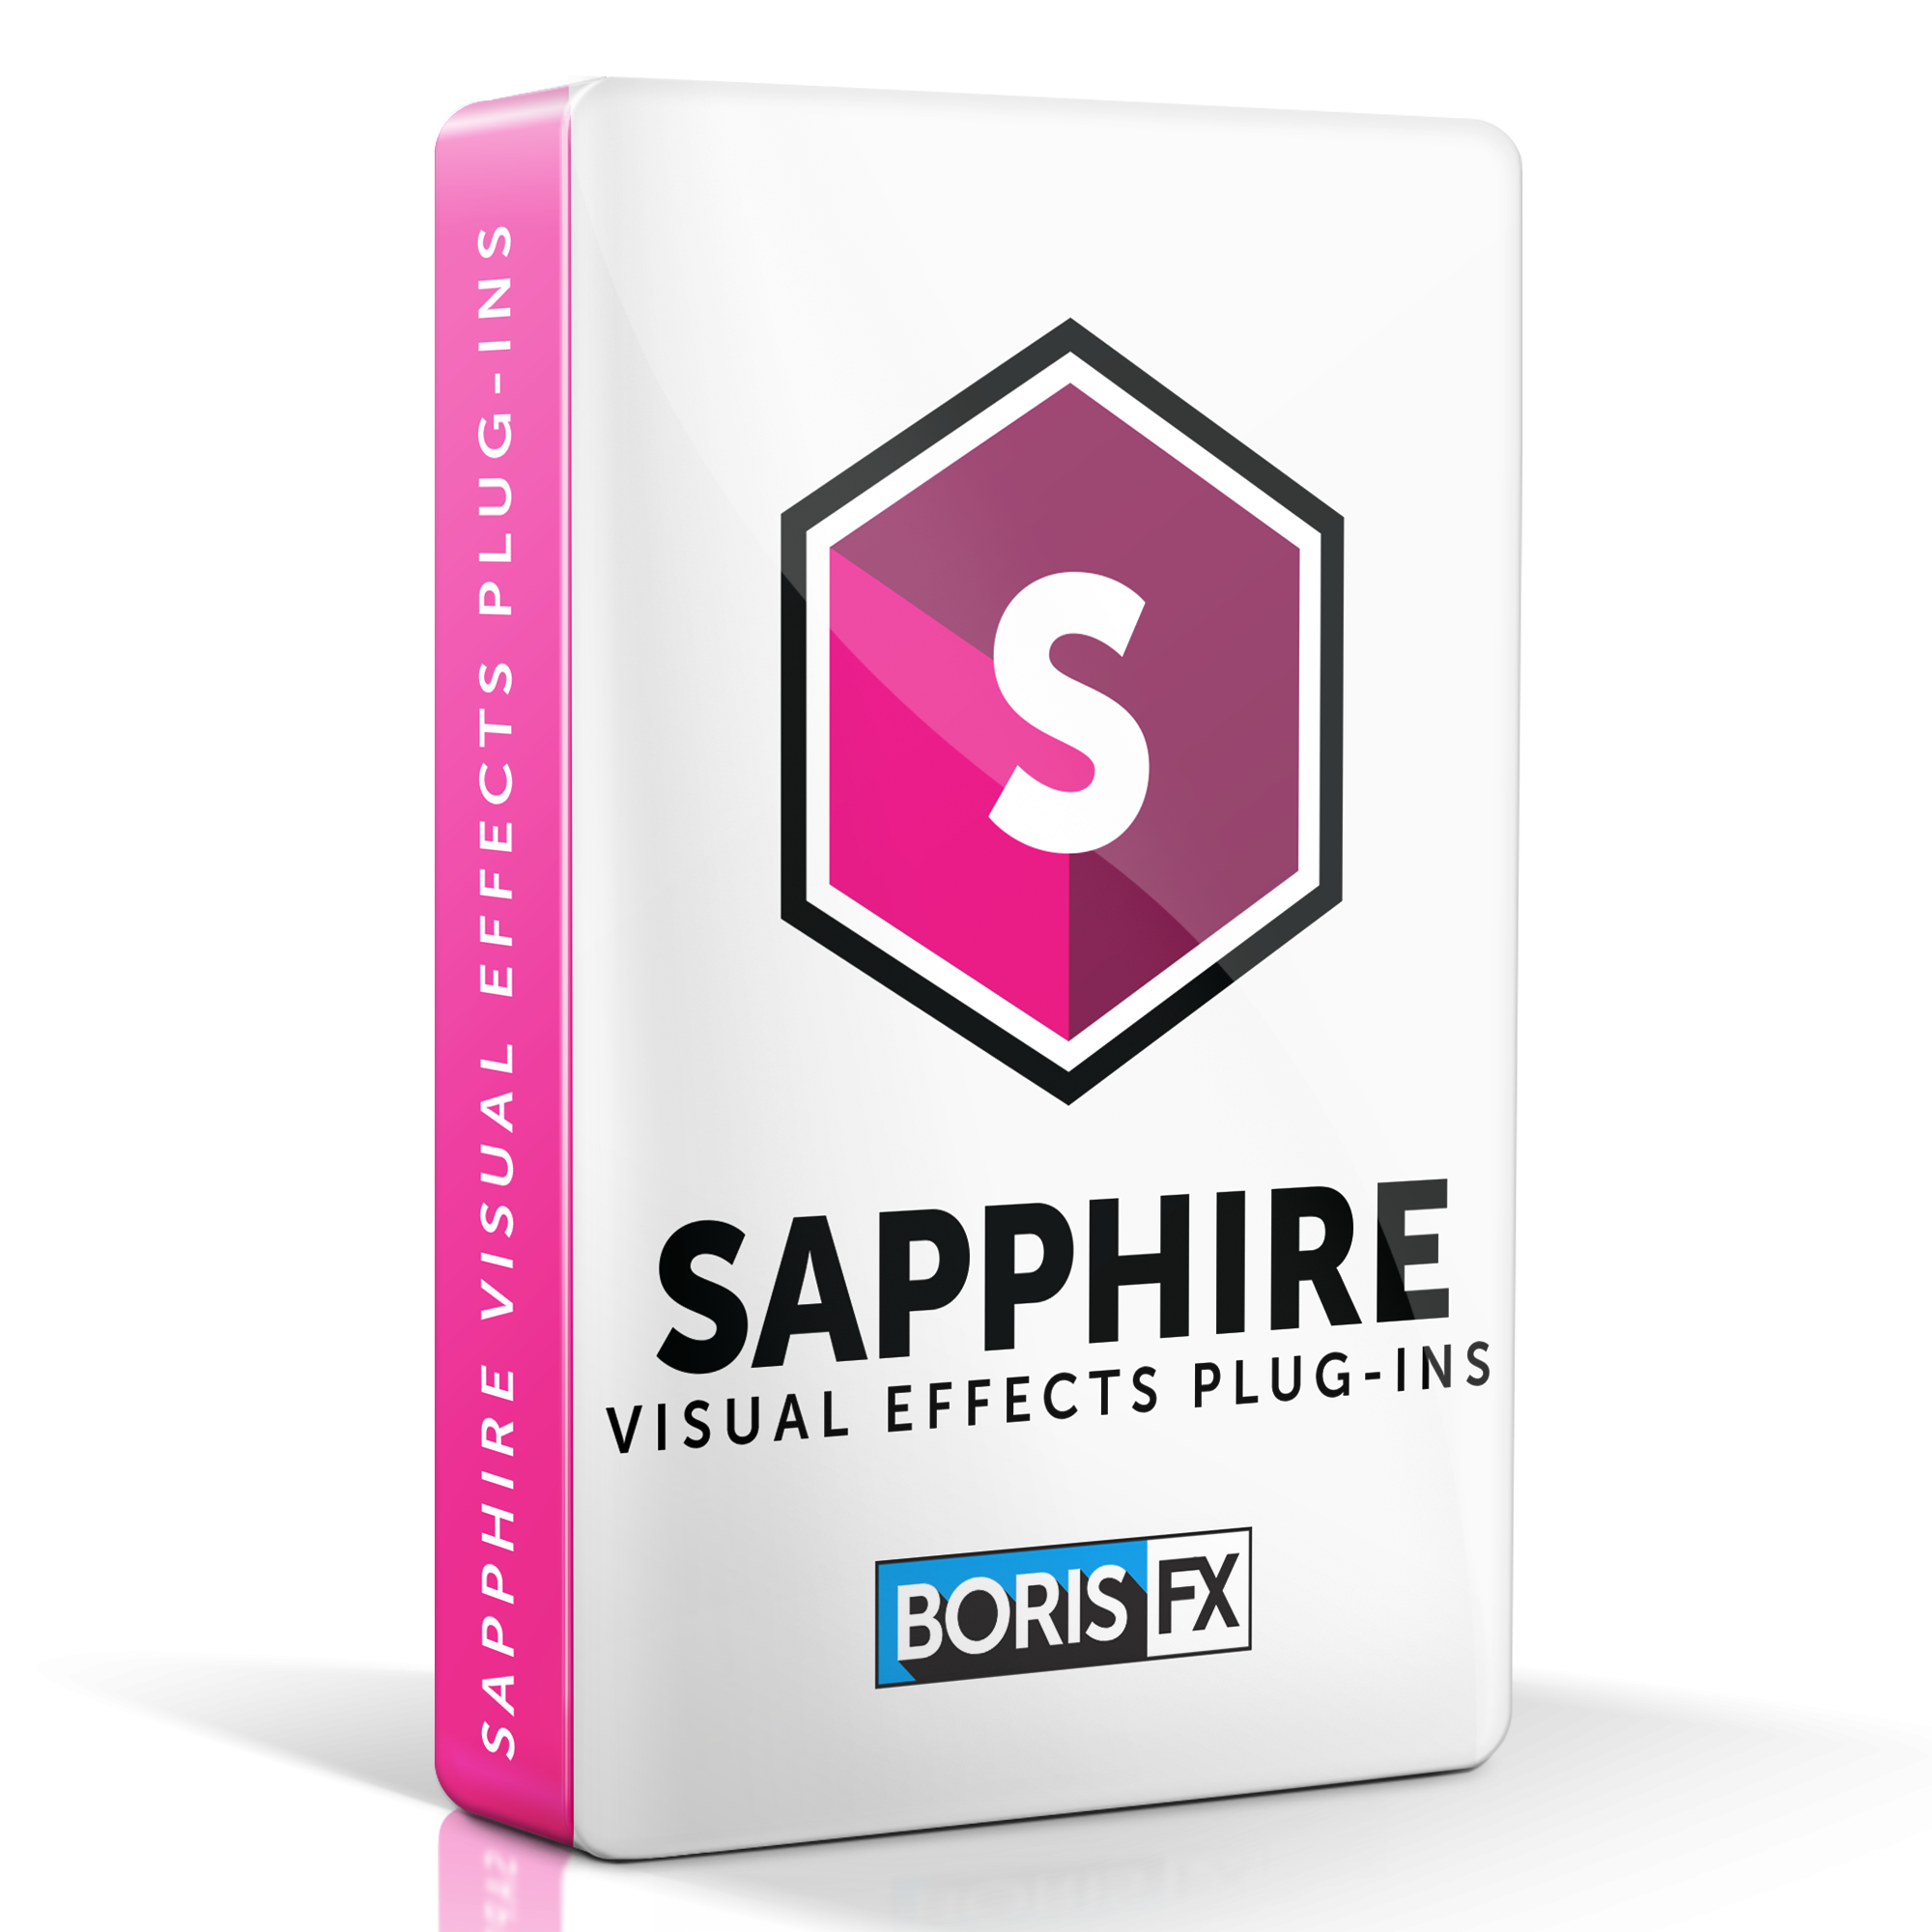 Sapphire 2021 Adobe/OFX GenArts, Inc.